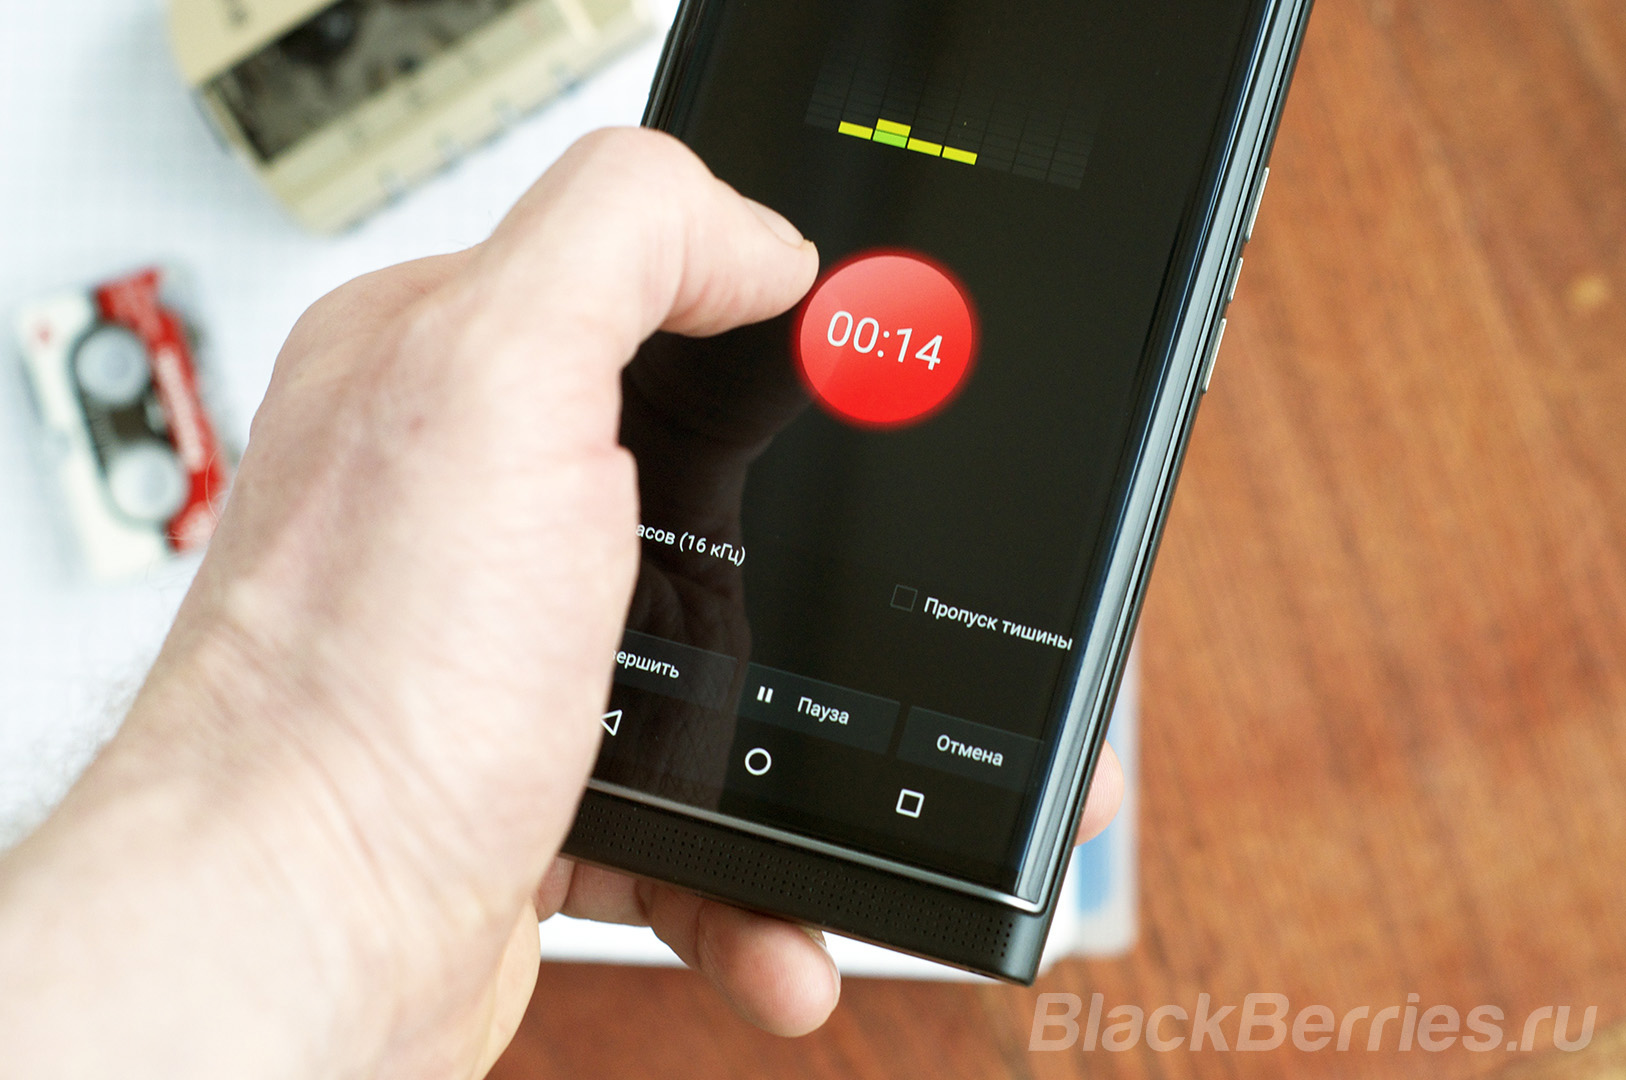 BlackBerry-Android-Recorder-01.jpg